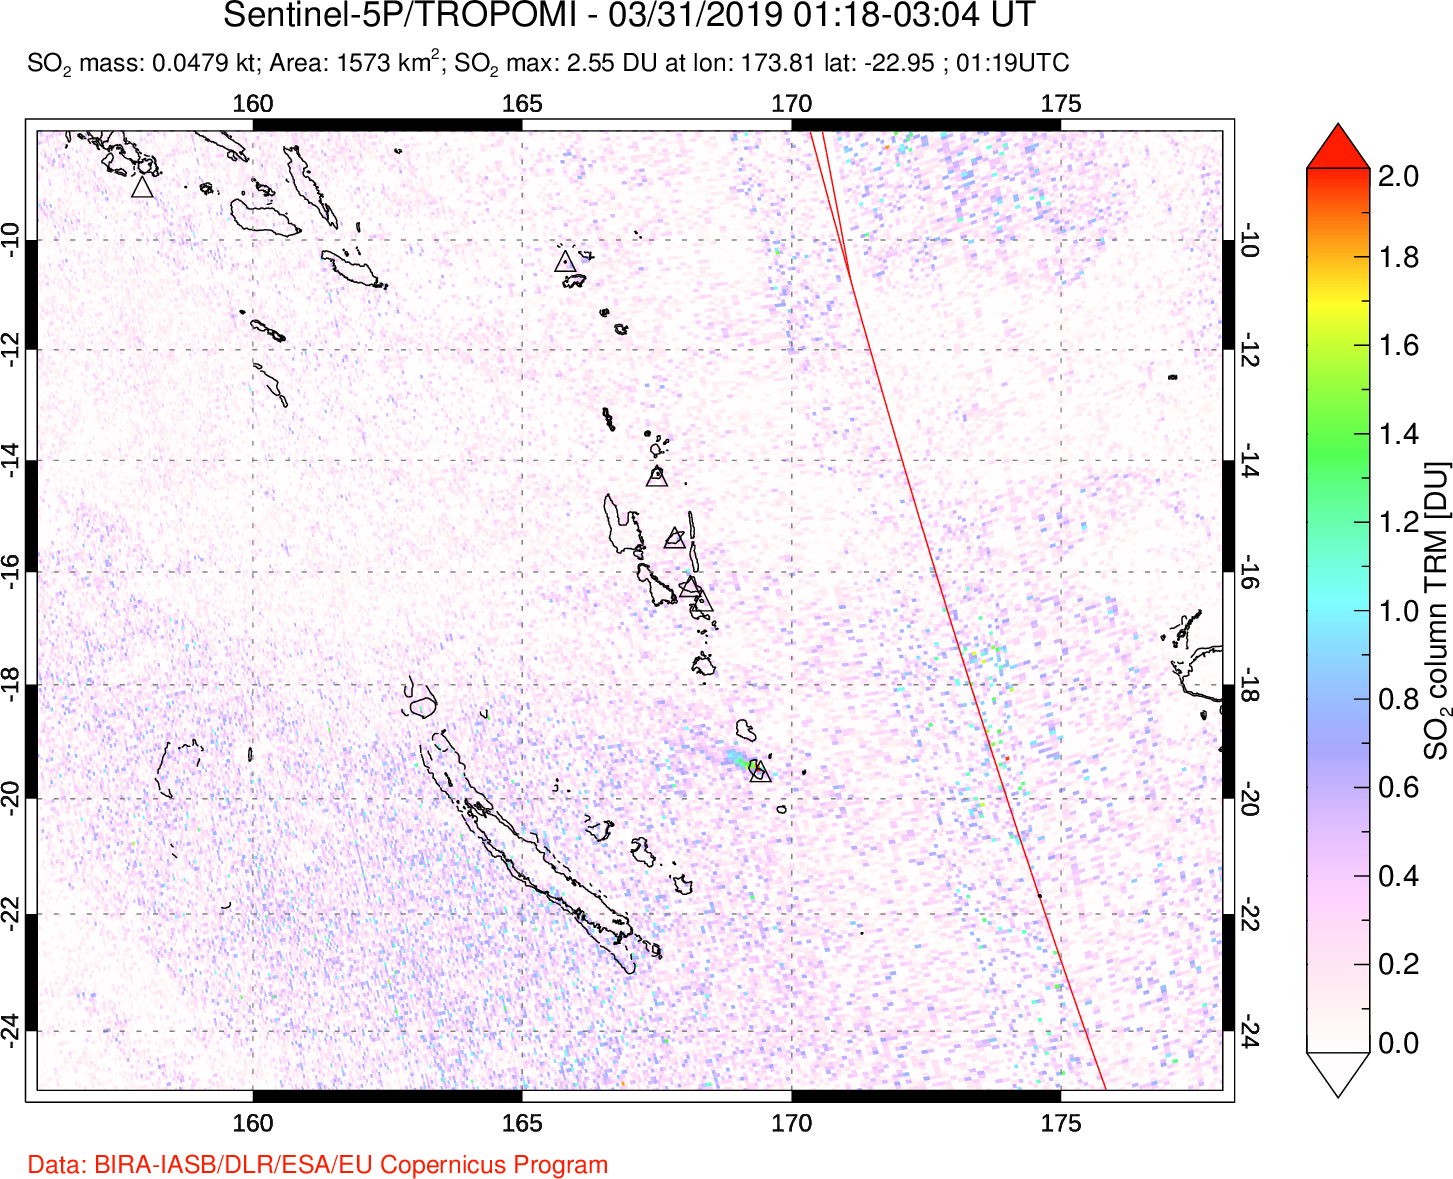 A sulfur dioxide image over Vanuatu, South Pacific on Mar 31, 2019.